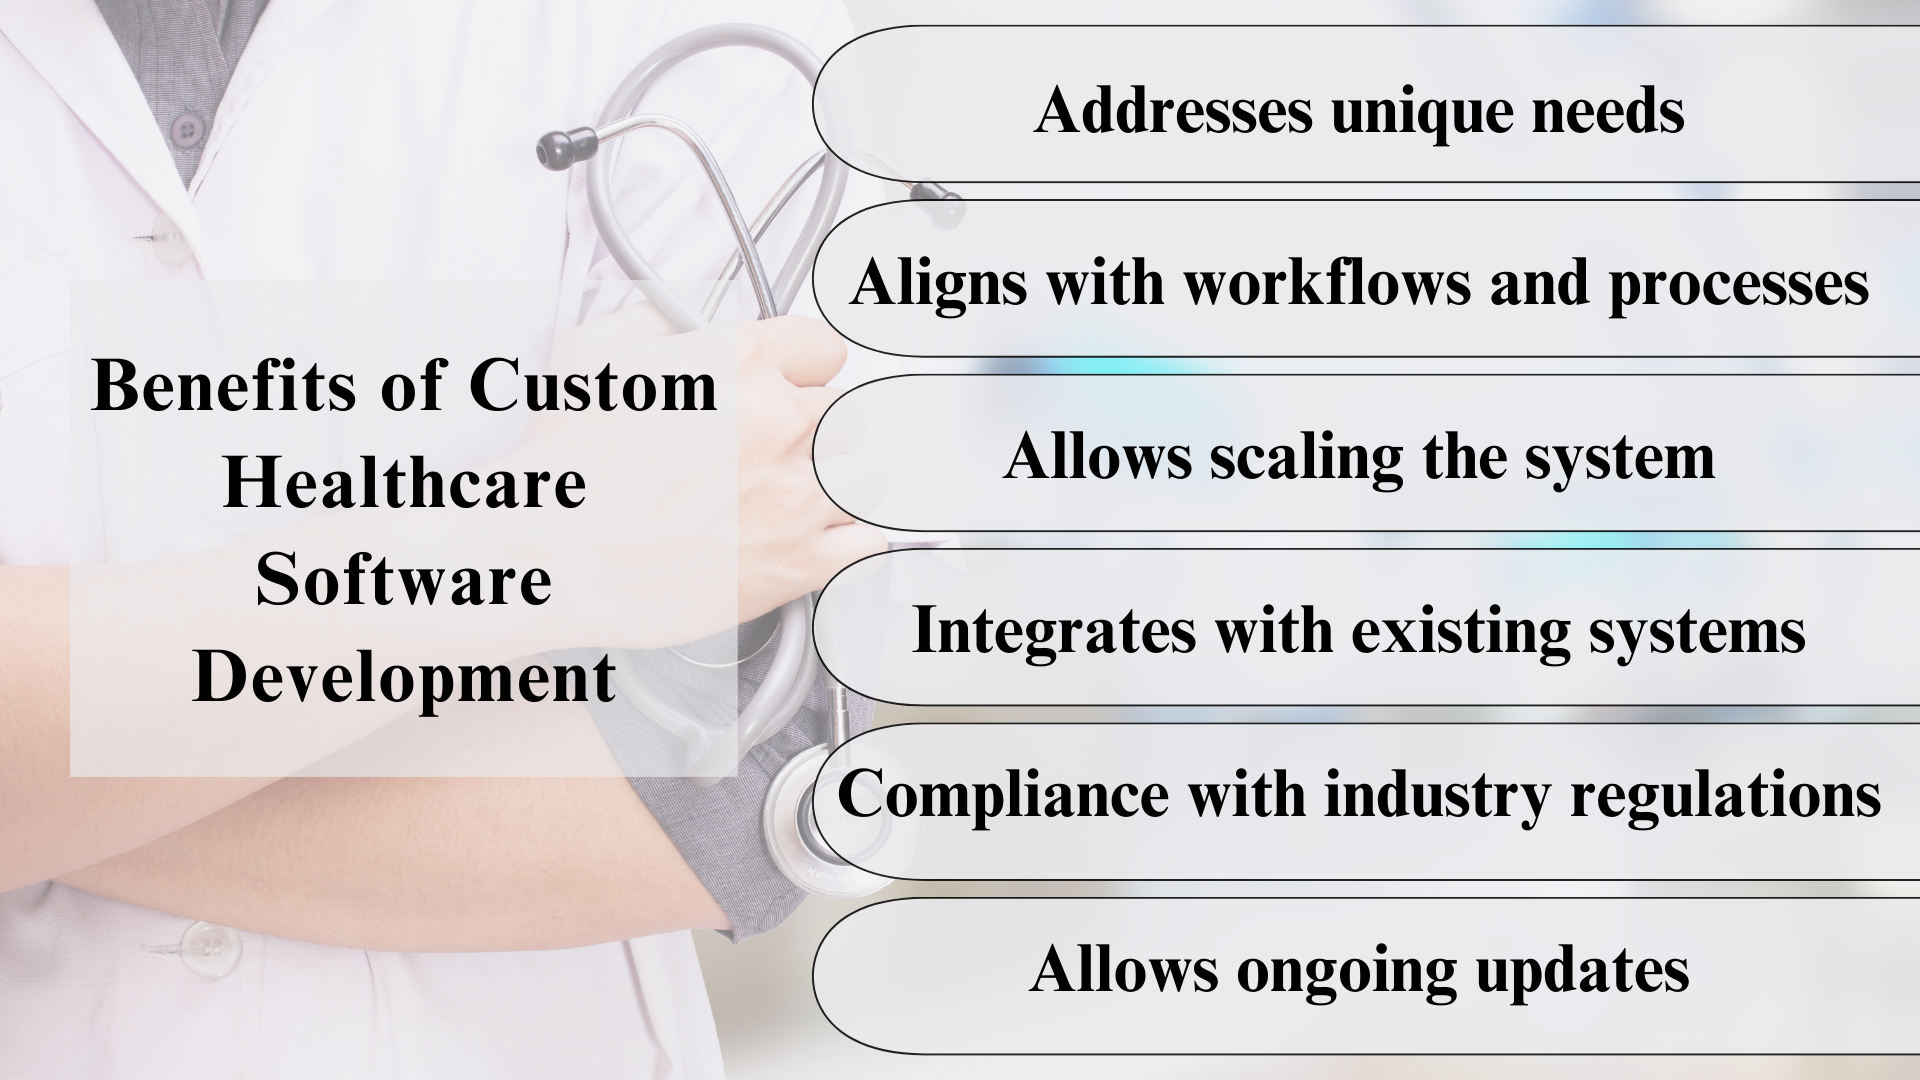 The Benefits of Custom Healthcare Software Development